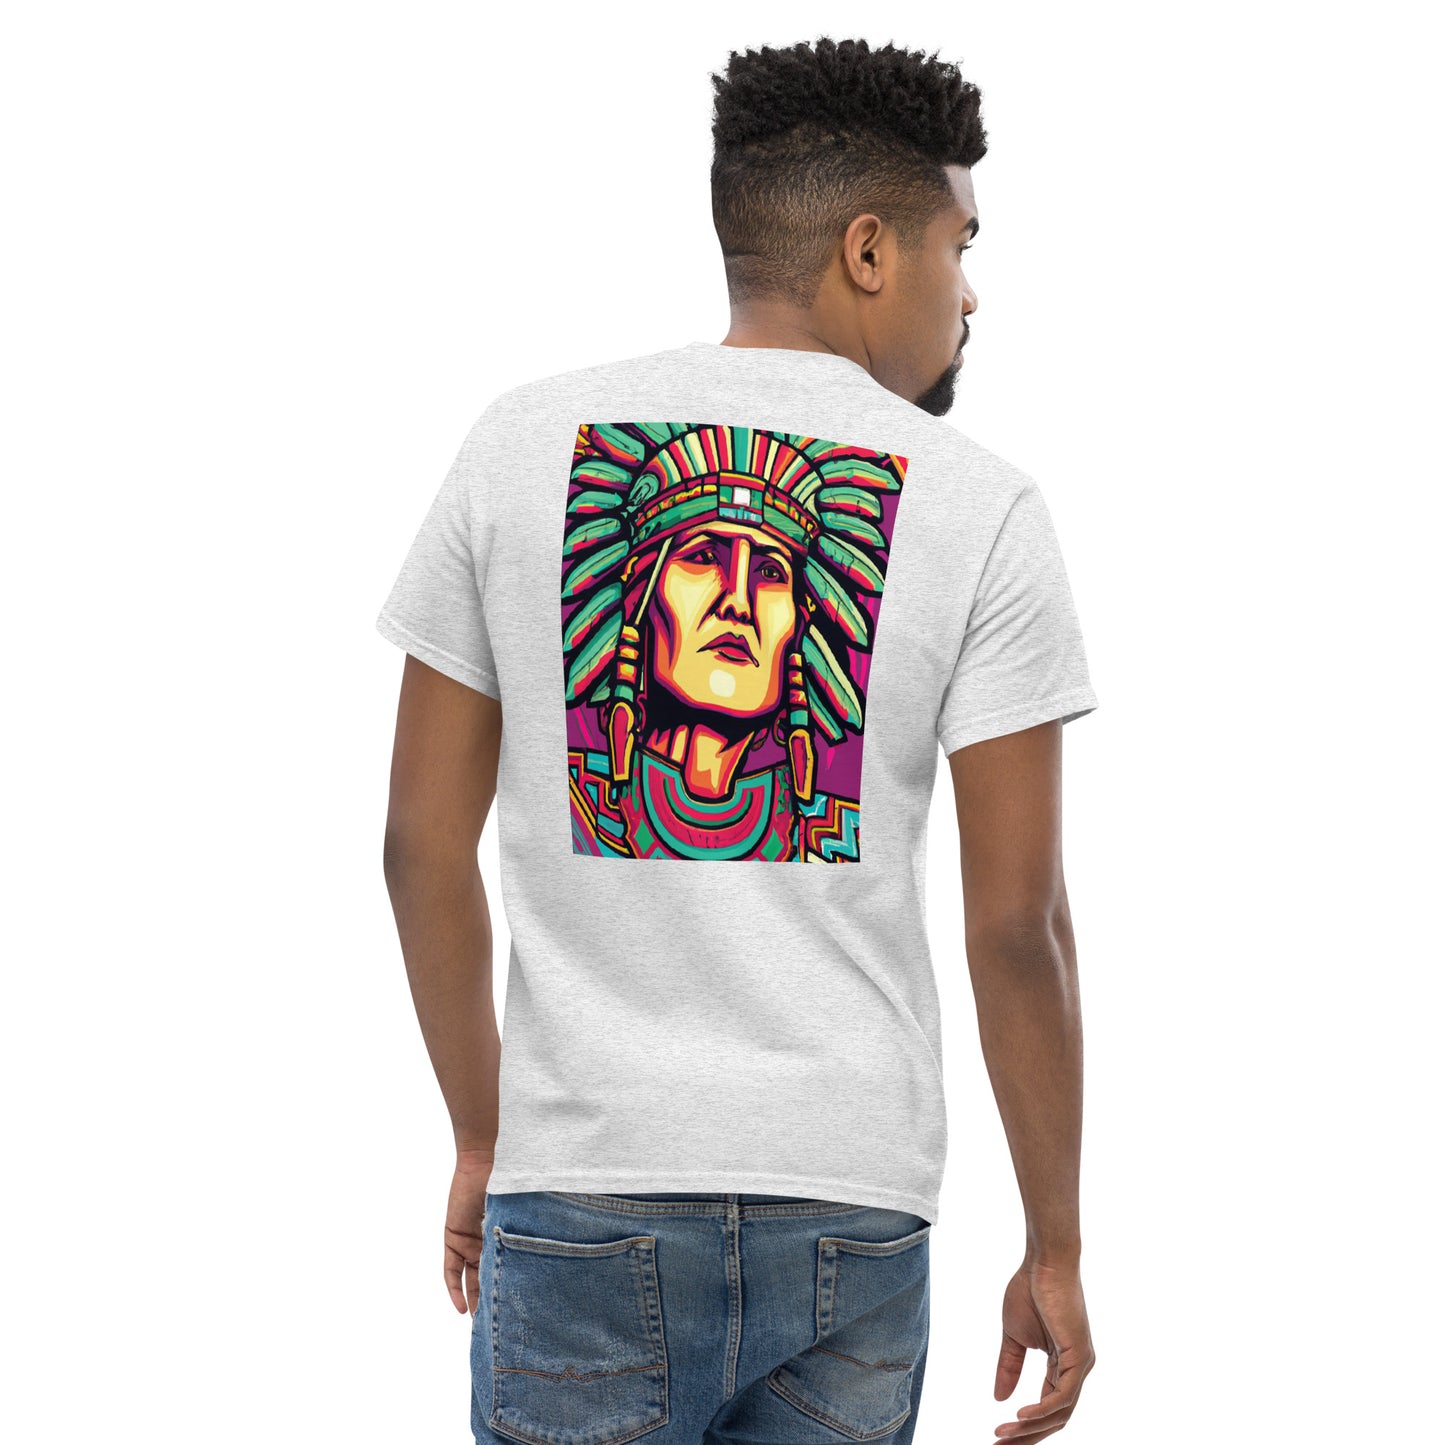 Aztec Warrior Tribute T-shirt